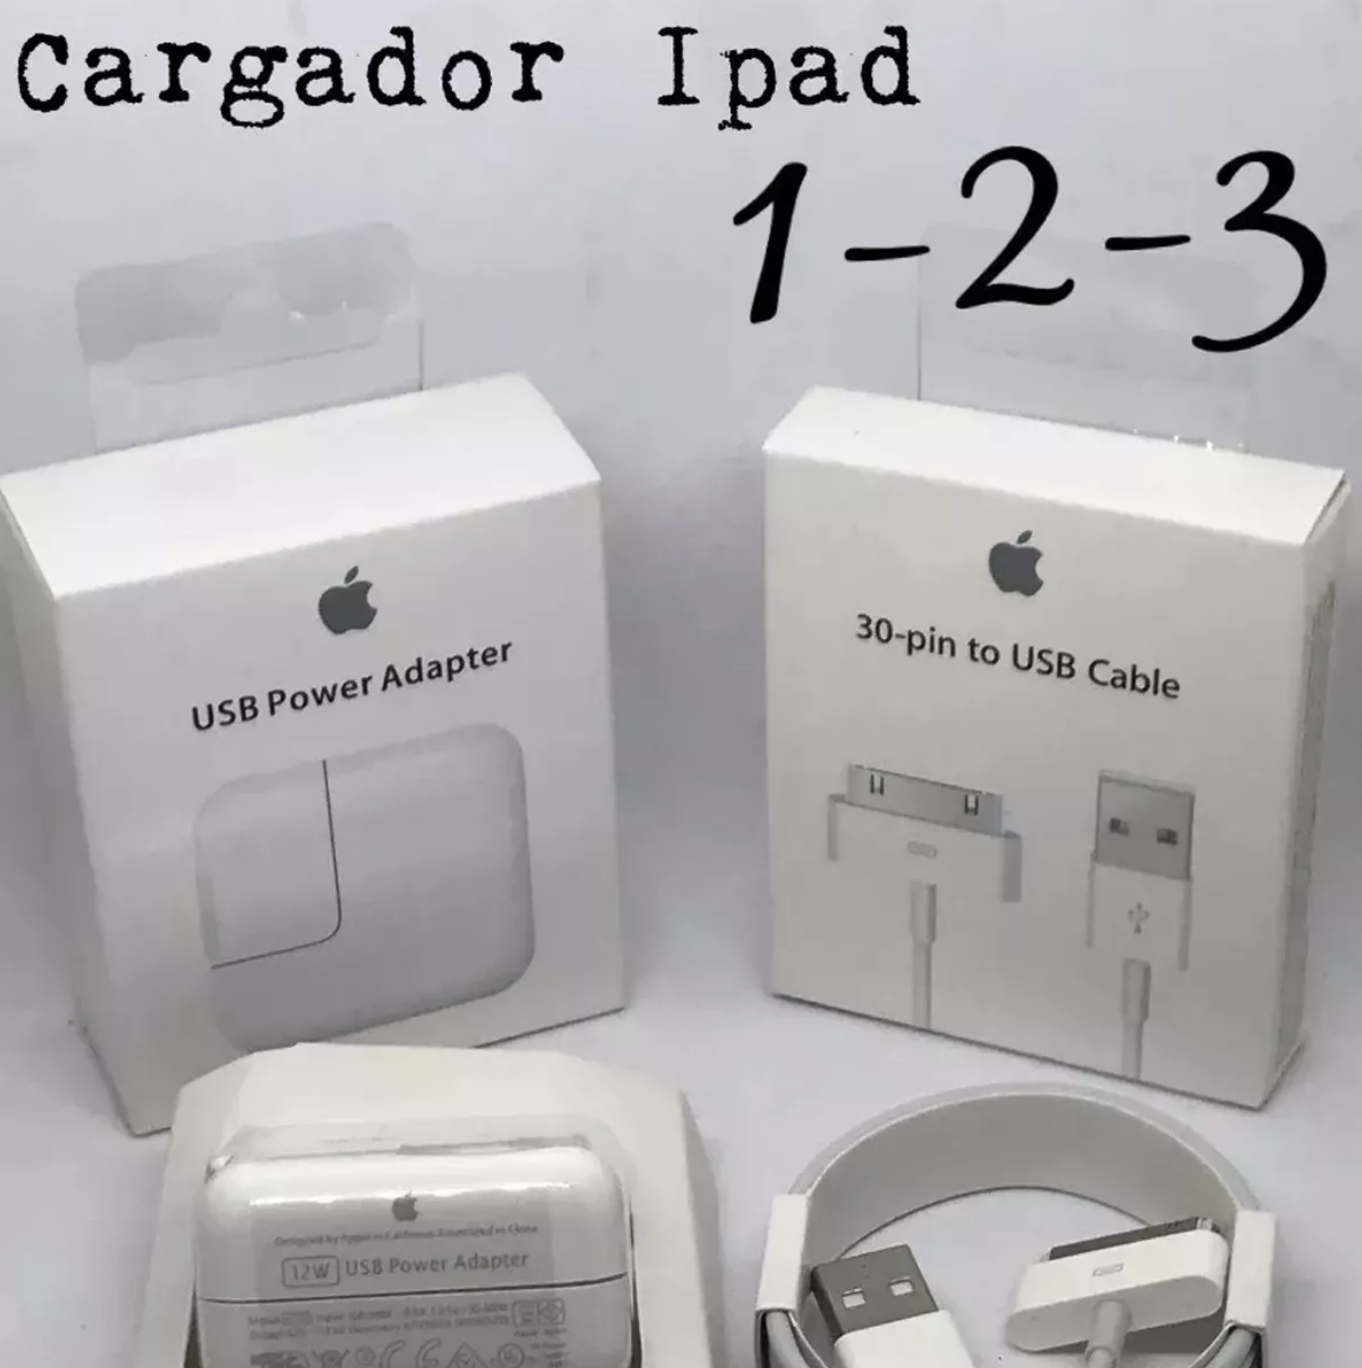 https://aykike.com.ar/wp-content/uploads/2023/02/Cargador-iPad-1-2-3-Original-Apple-12-Wts-Cable-Usb-30-Pines-Sellados-Caja-Carga-Rapida-Tienda-AYKIKE-2.png